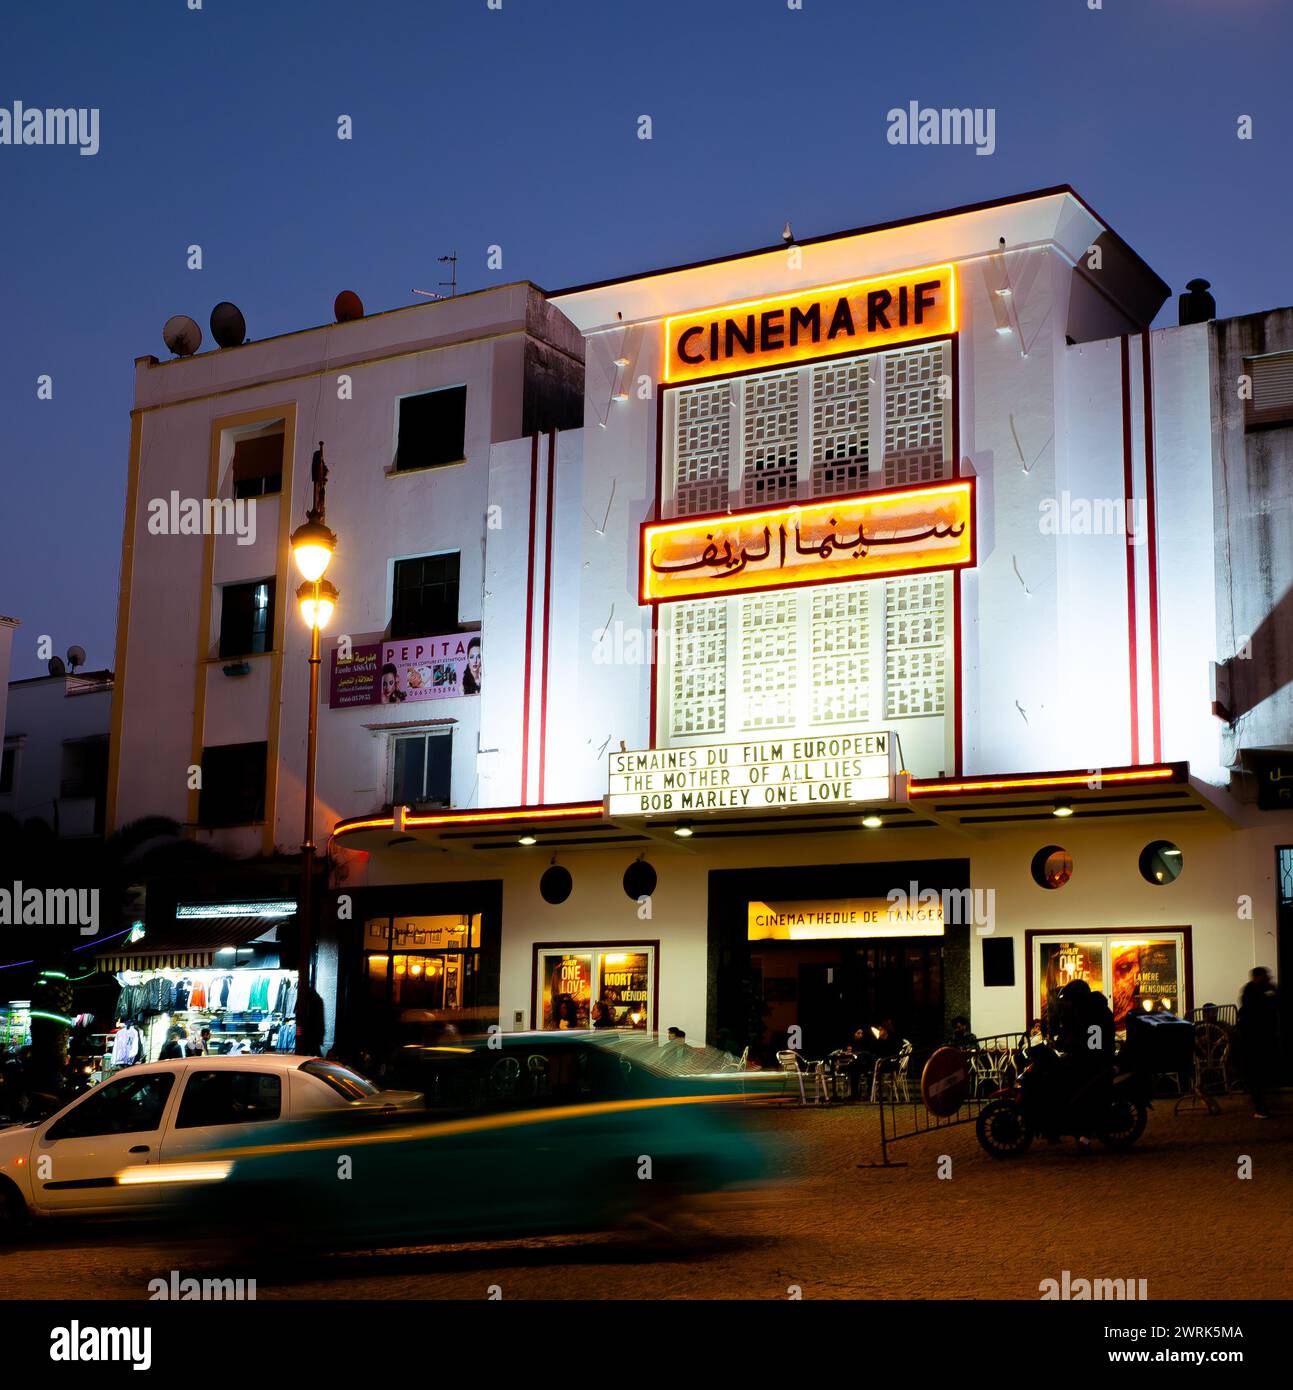 Cinéma Rif Tangier (Morocco) at night Stock Photo